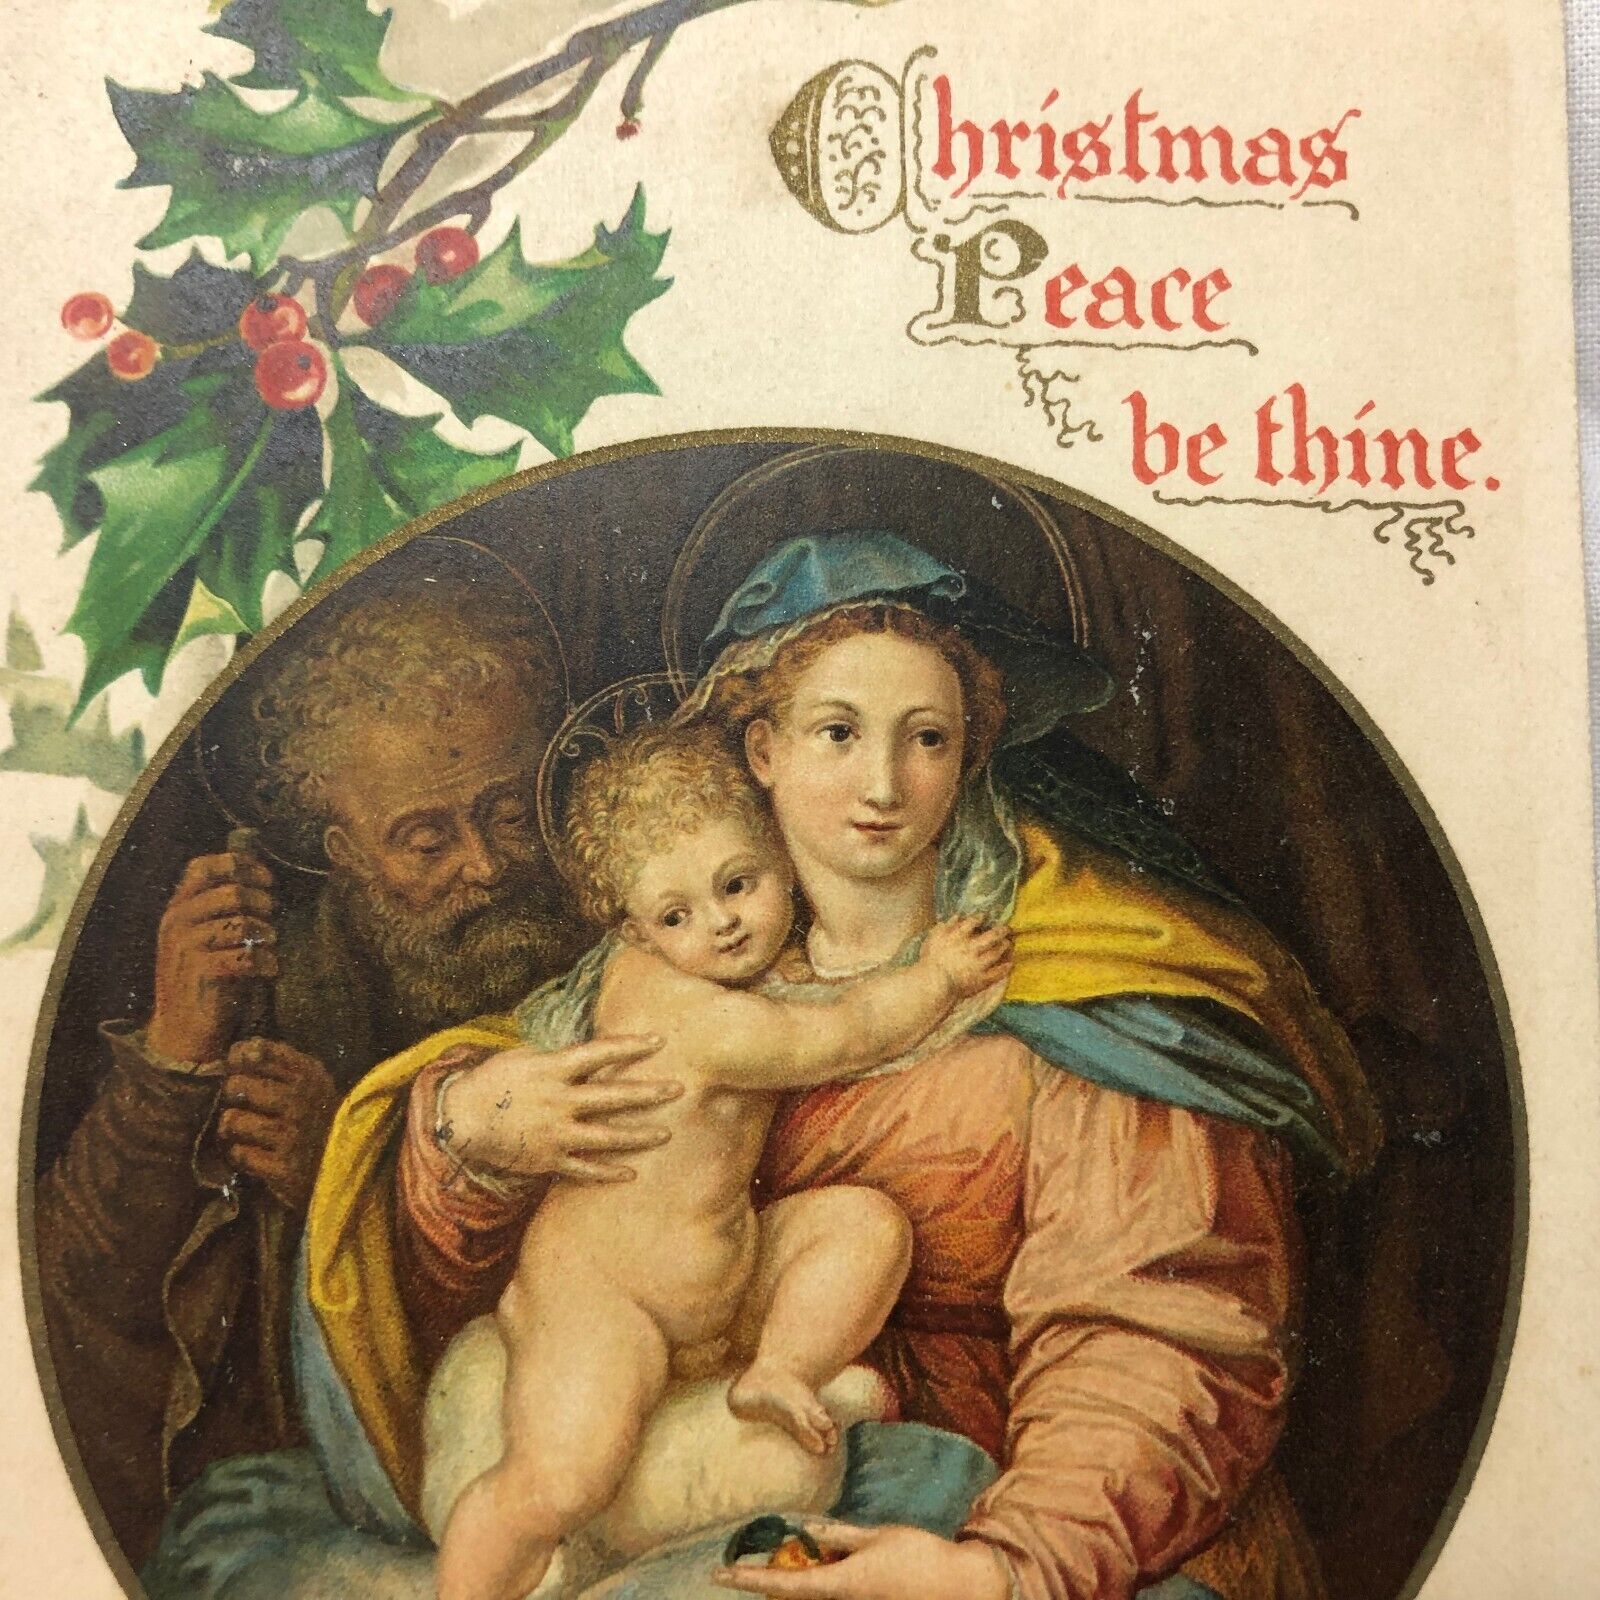 Vintage 1907 Christmas Peace be Thine Postcard